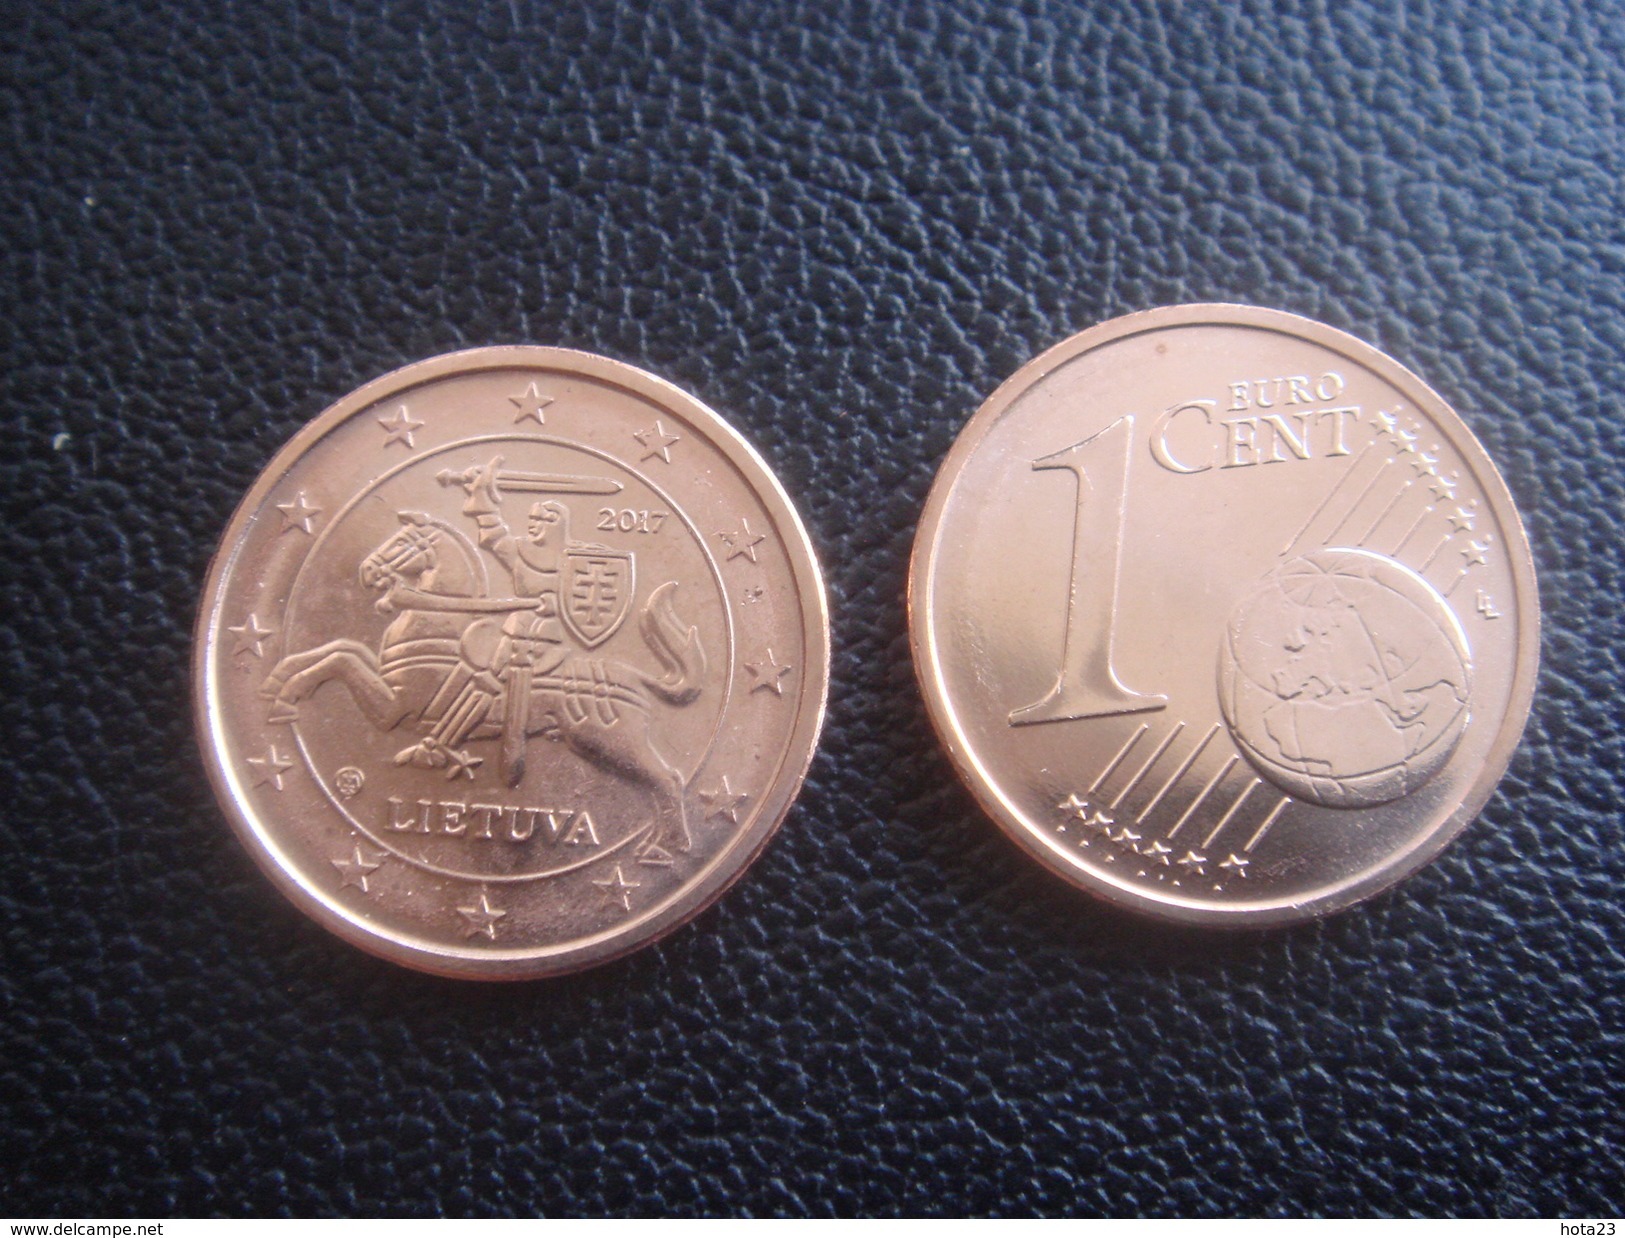 Neu Lithuania Litauen Lietuva  1 Euro Cent 2017  Münzen Aus Rolle  UNC - Lithuania